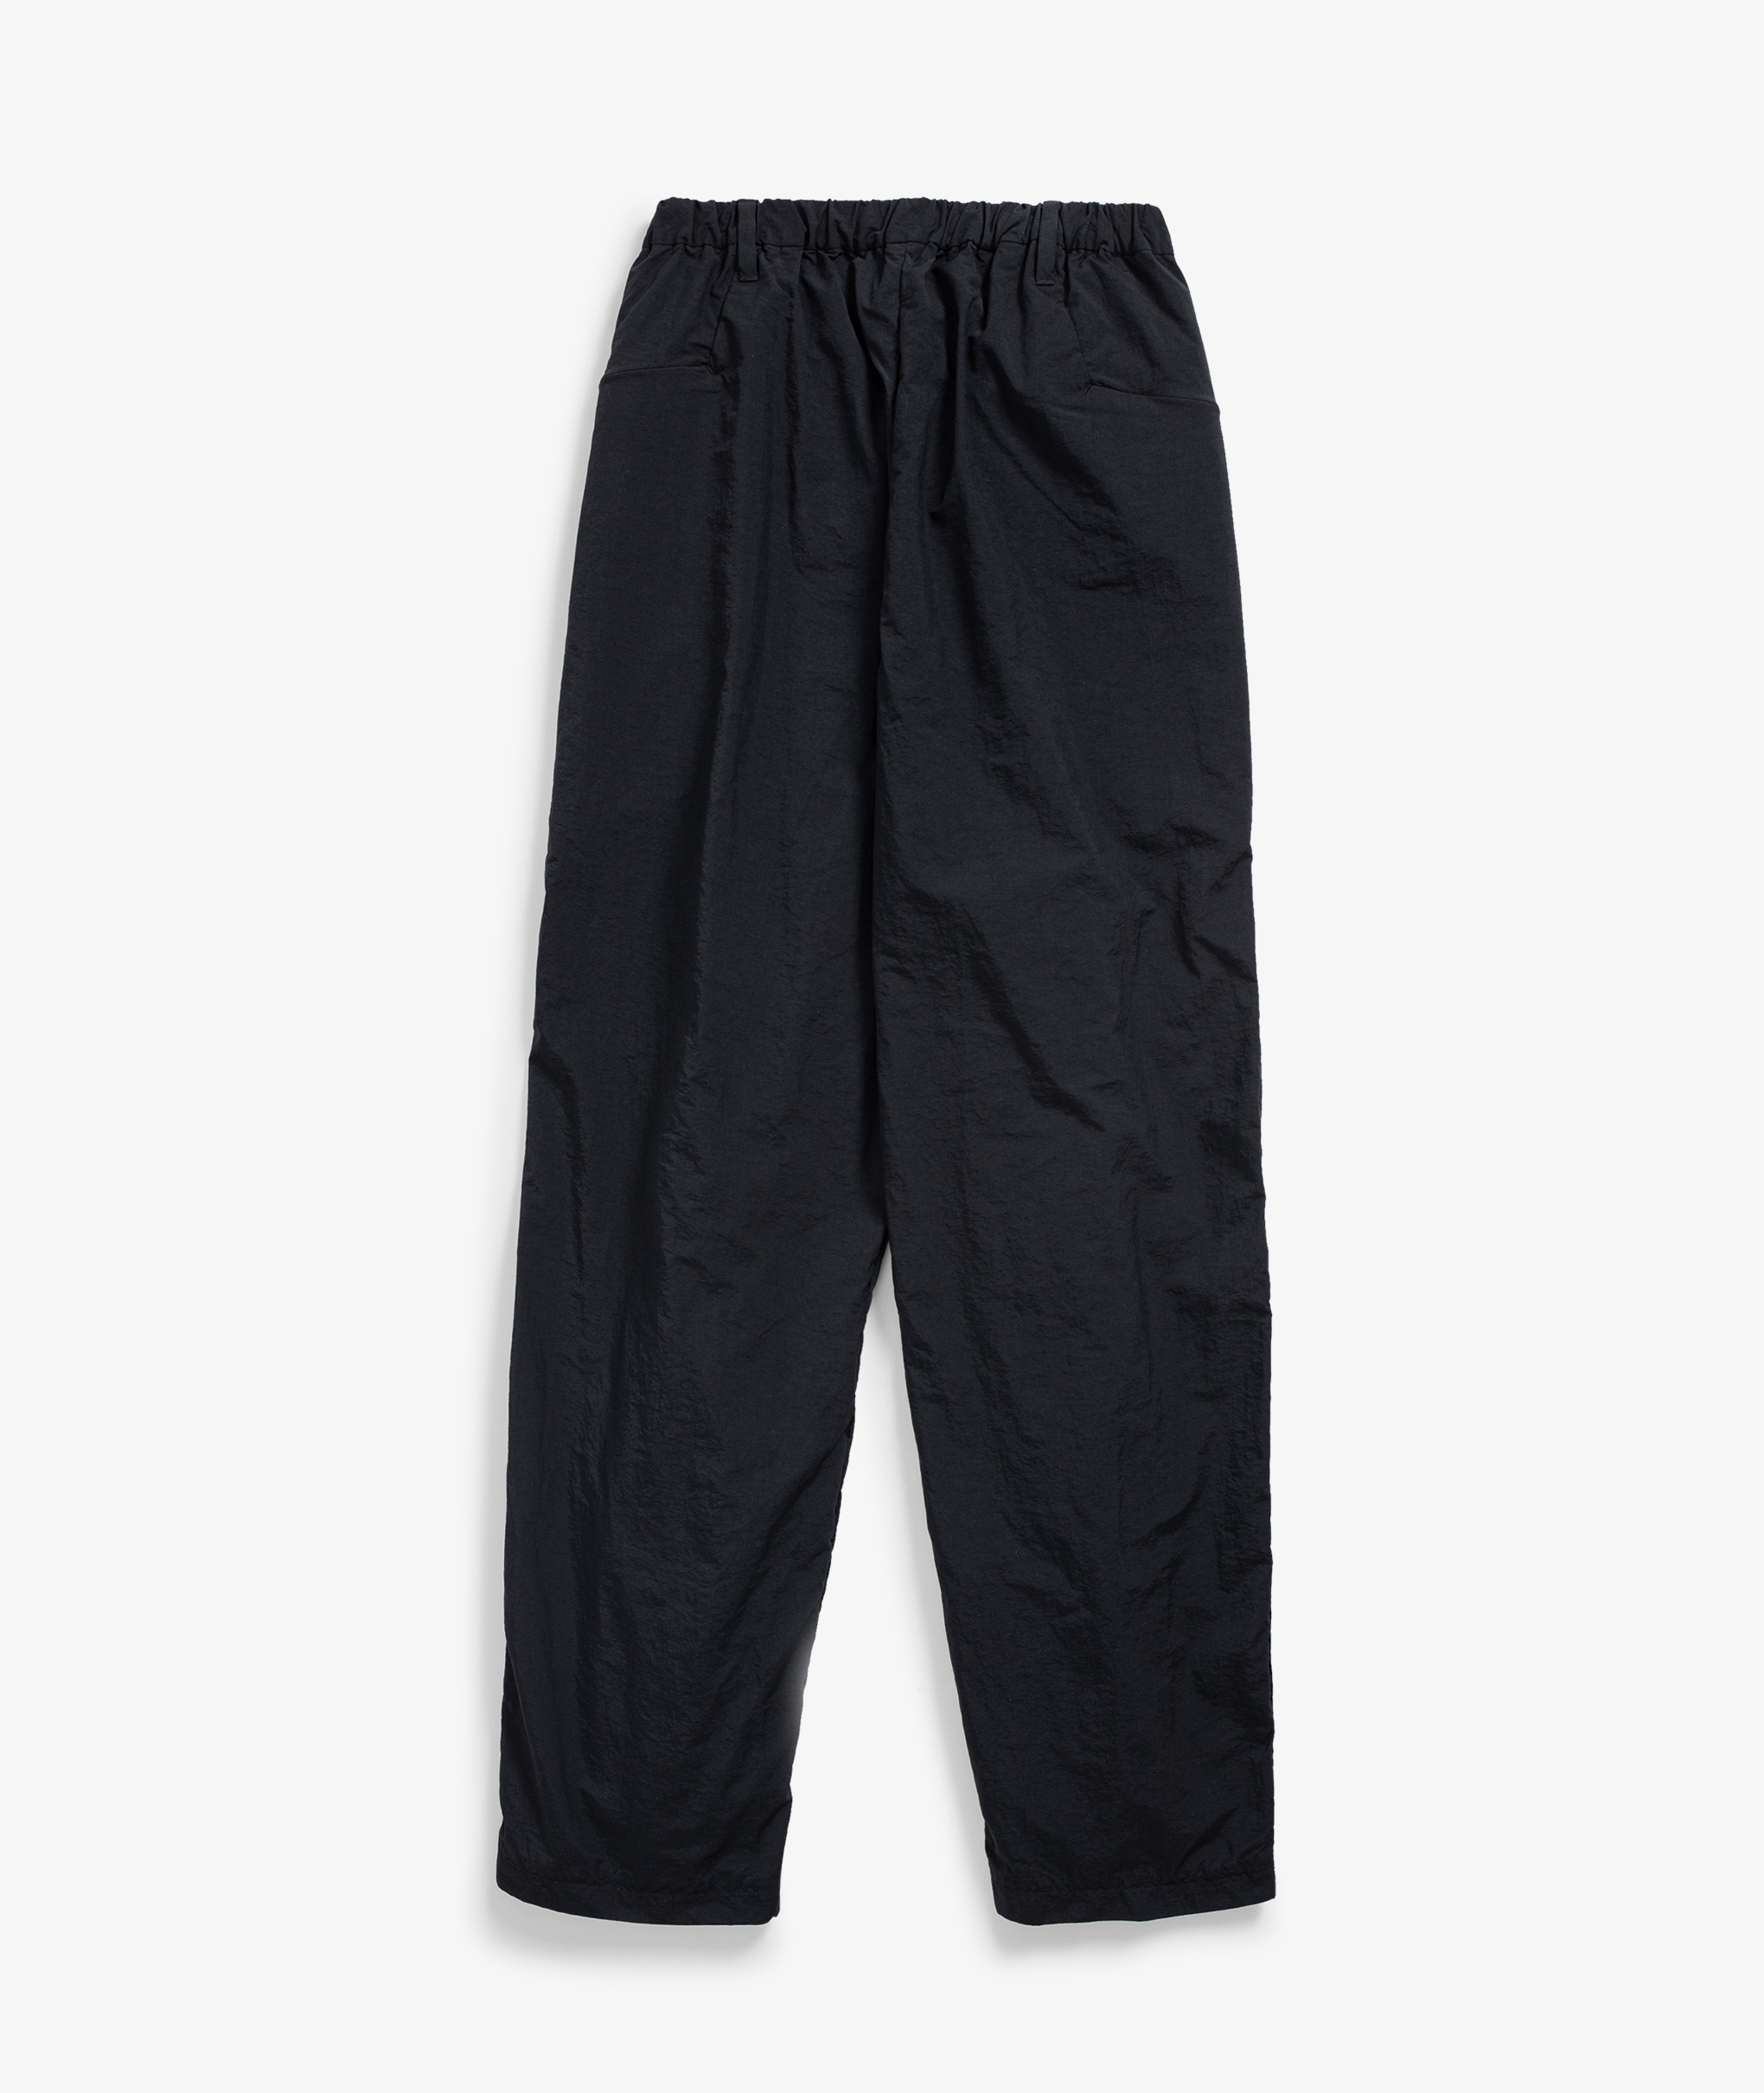 TEATORA Wallet Pants PACKABLE * Black - ワークパンツ/カーゴパンツ